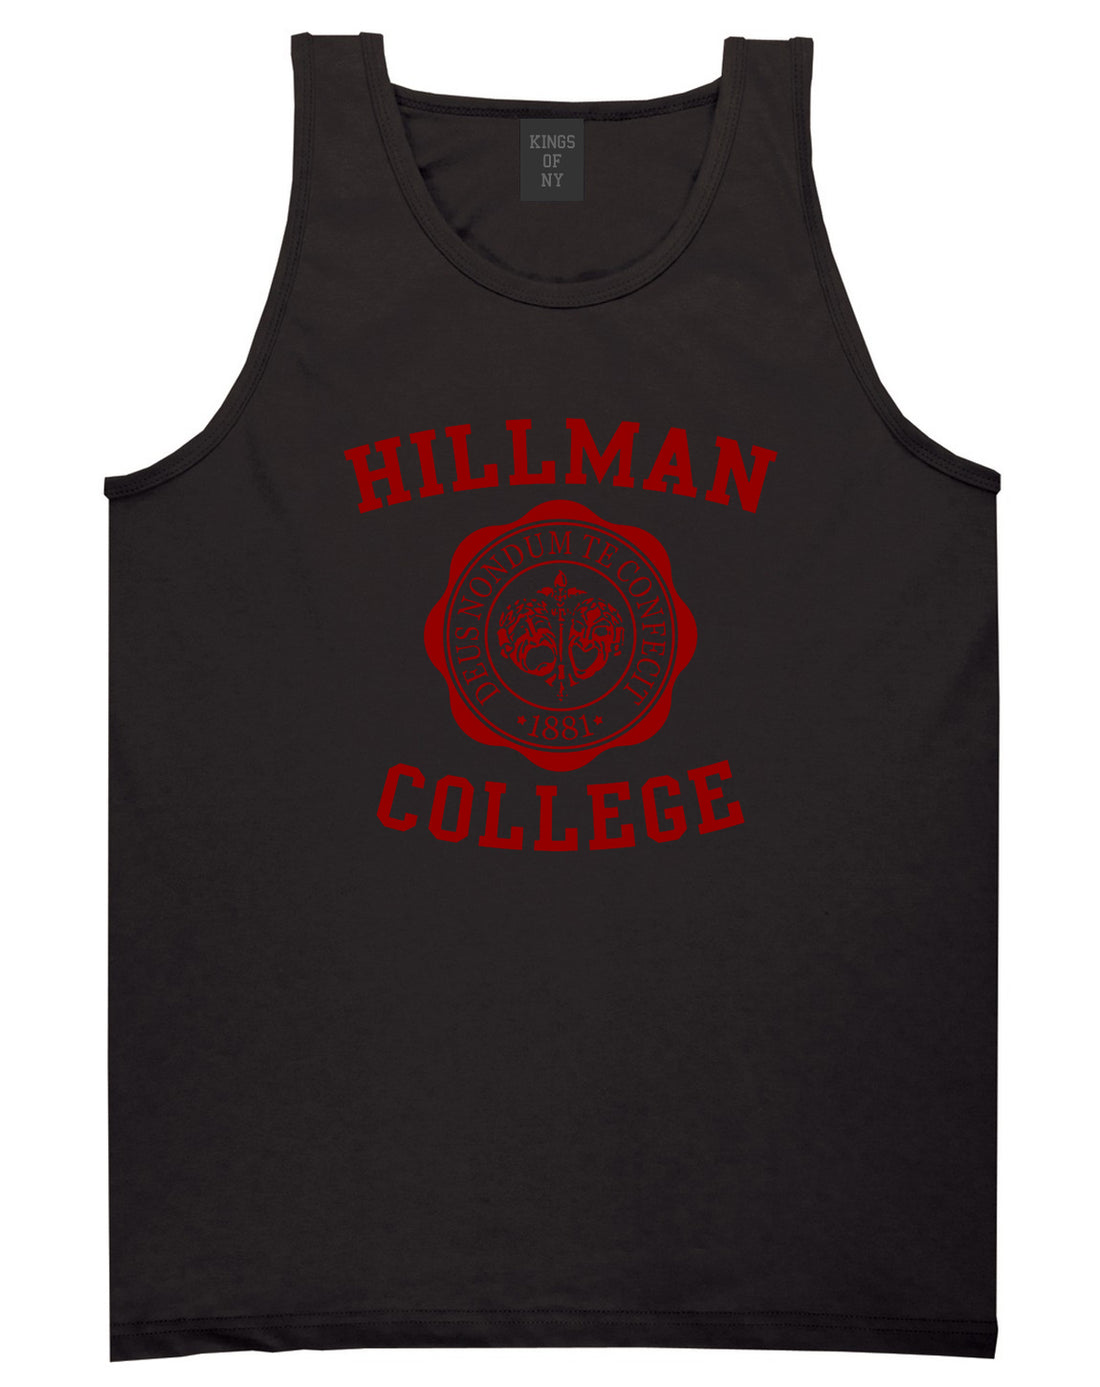 Hillman College Mens Tank Top Shirt Black